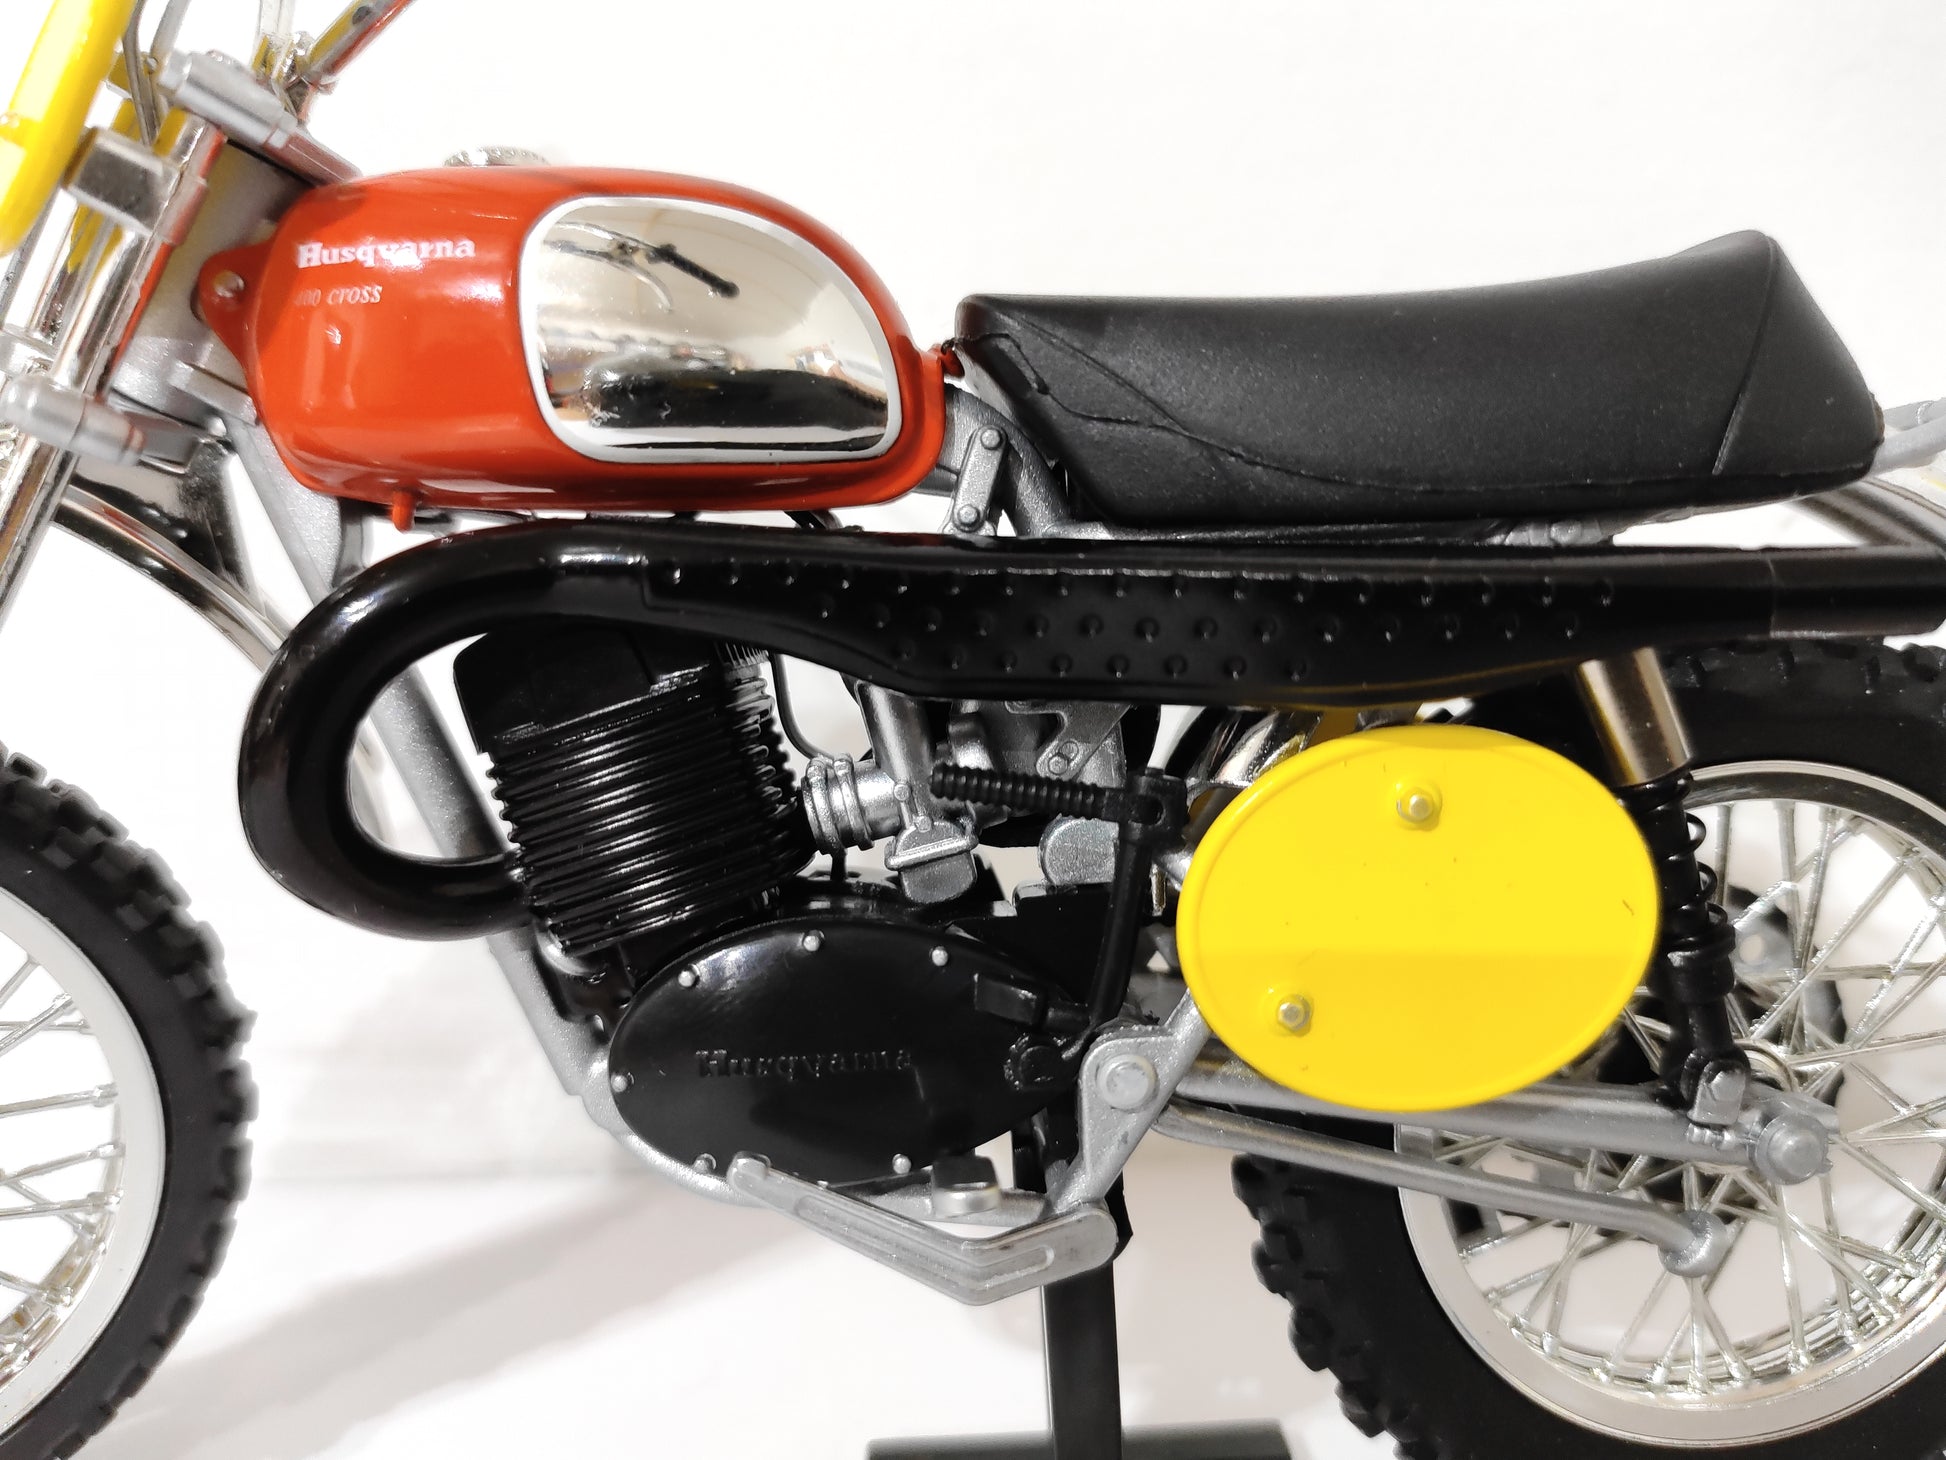 Moto Miniature Husqvarna Cross 400 1970 Replica Bengt Aberg | Motocross,  Enduro, Trail, Trial | GreenlandMX